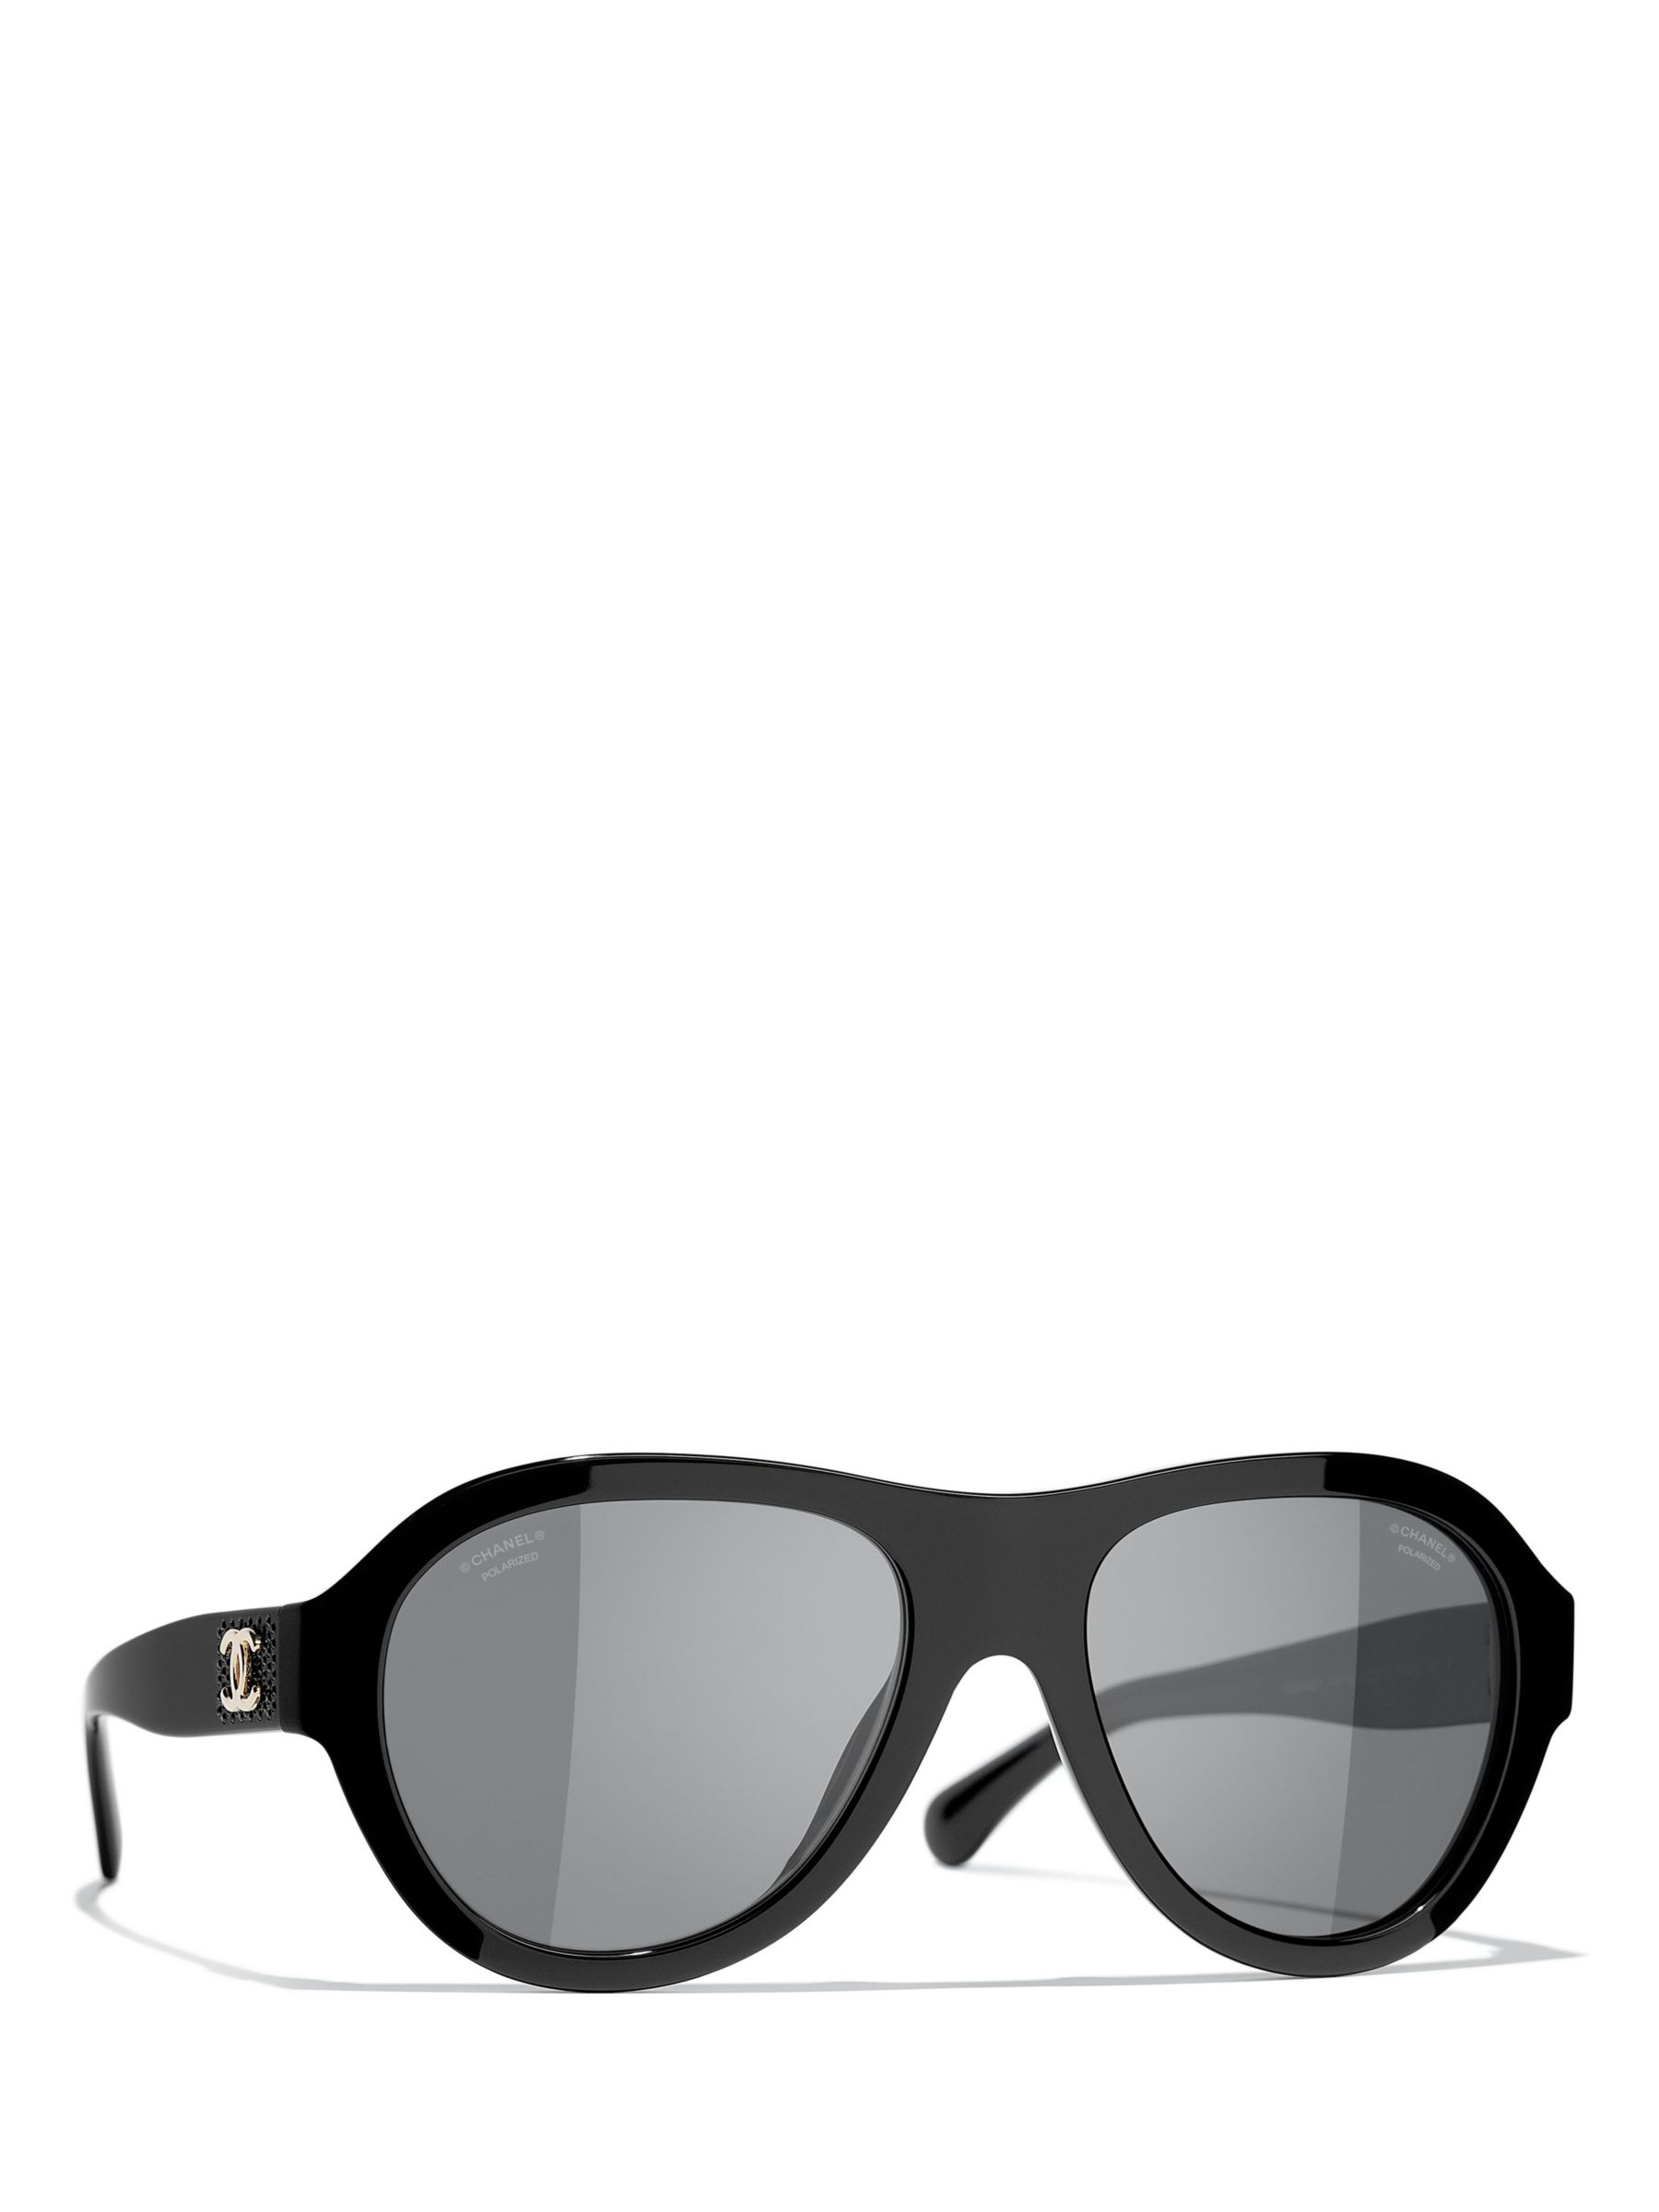 Chanel Mens Sunglasses